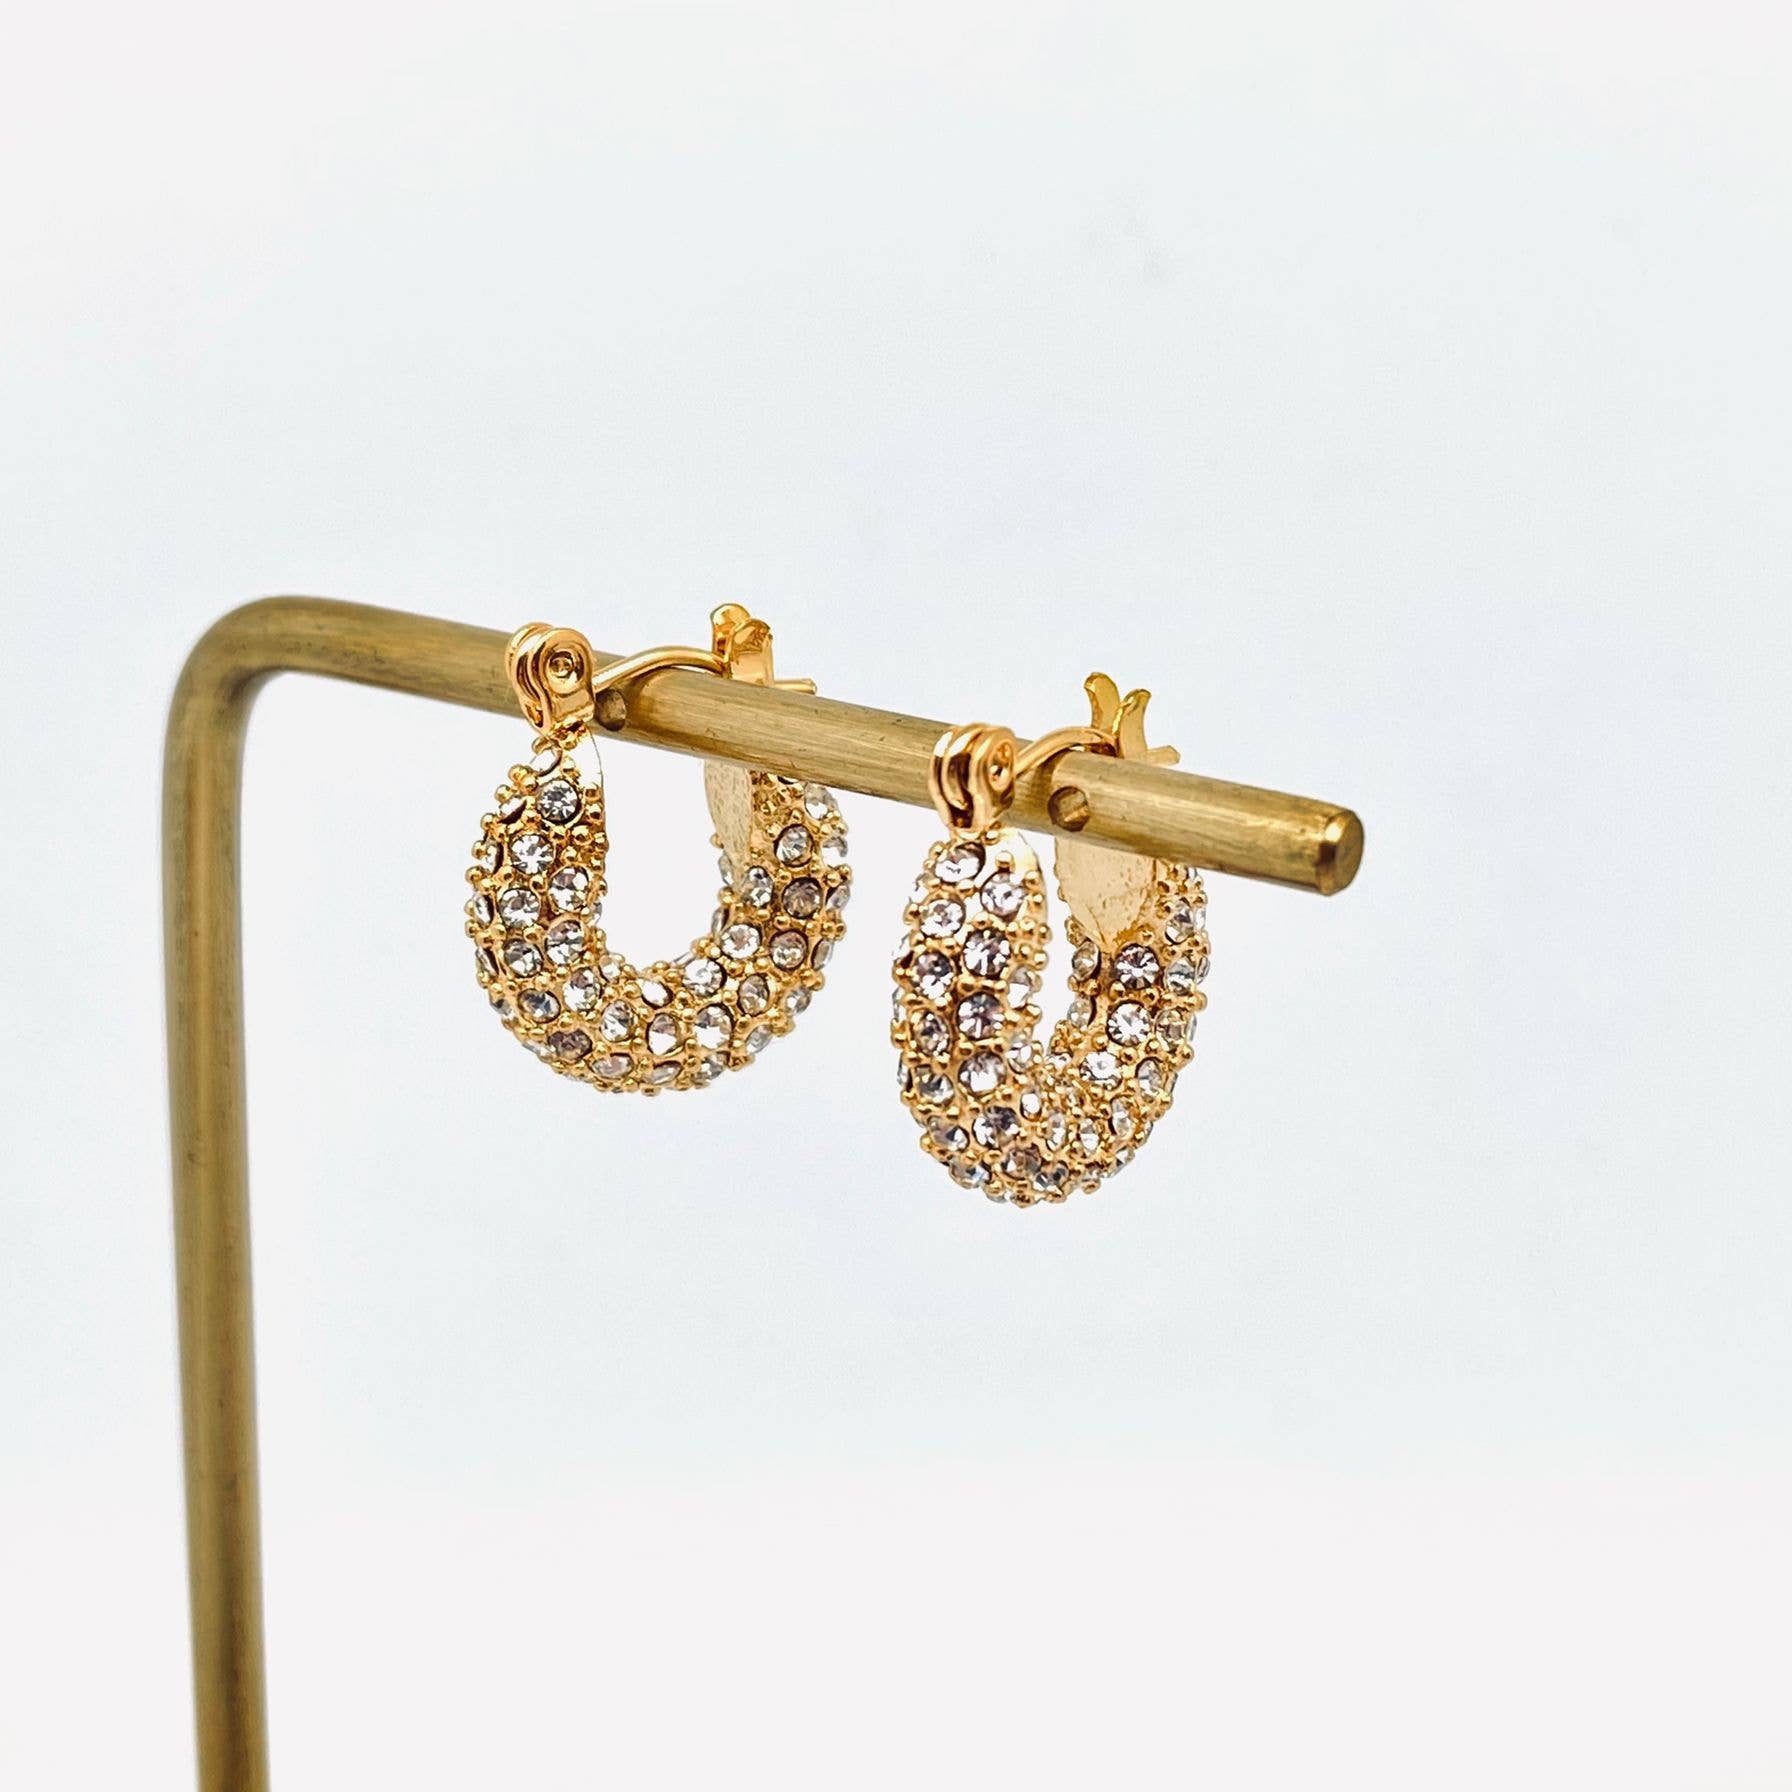 Sparkling 18K Gold Plated Stainless Steel Hoop Earrings: S - Whtie Cubic Zirconia